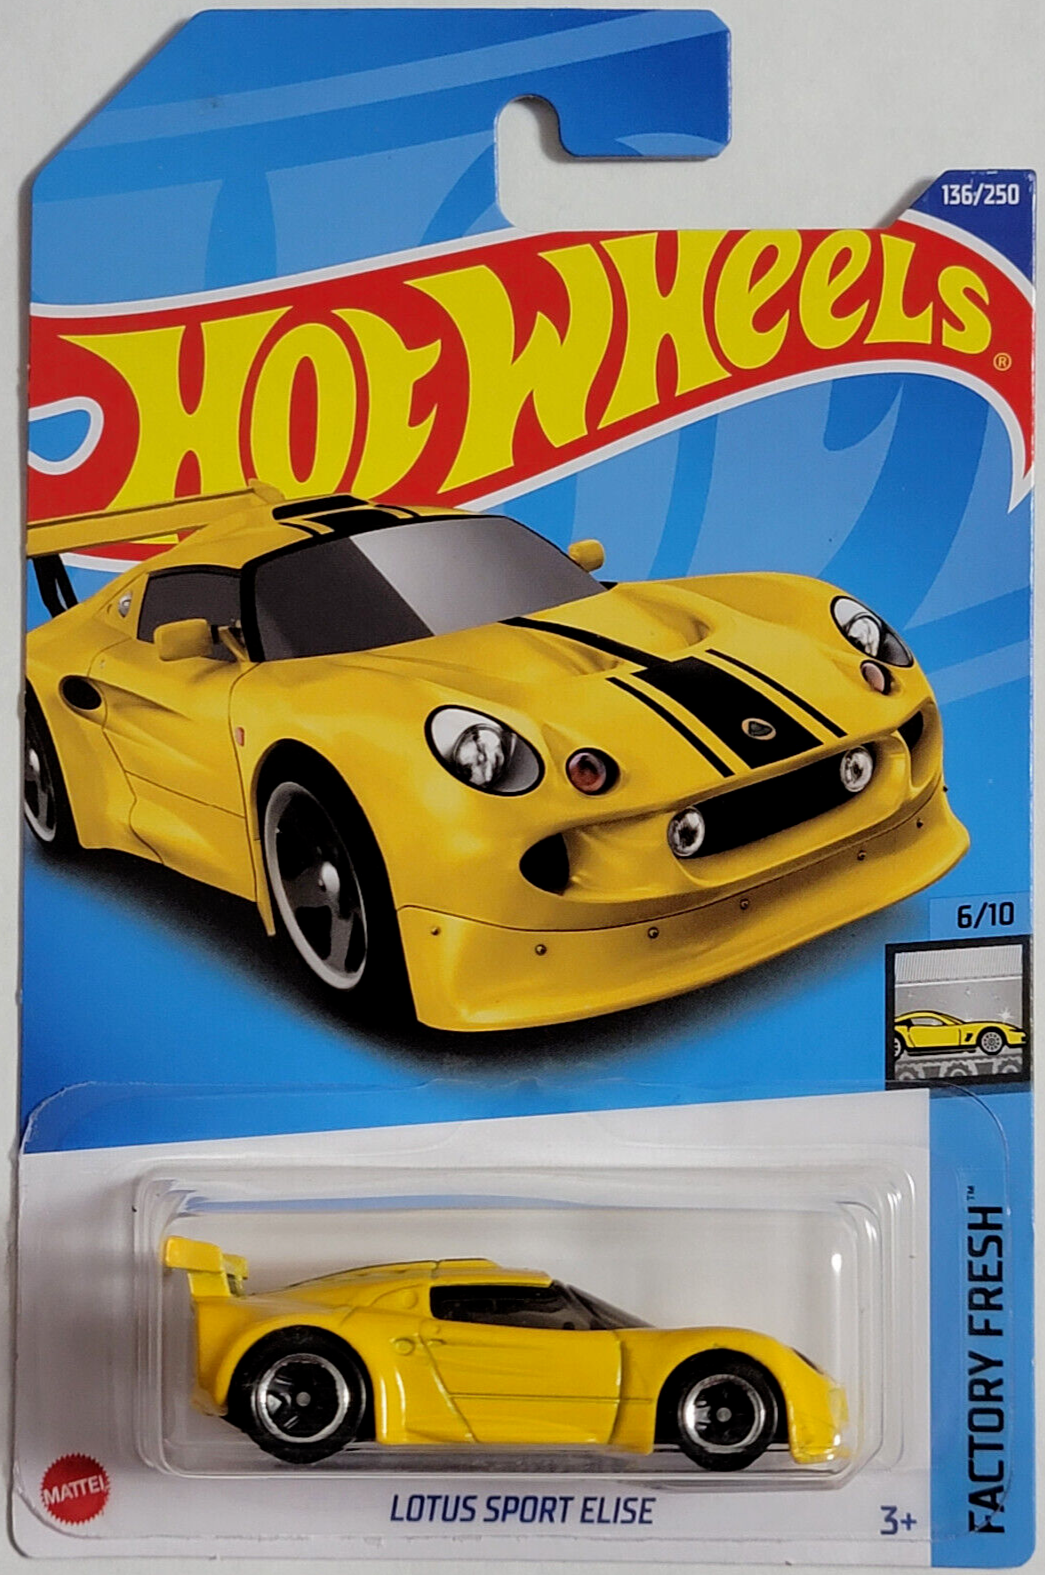 Hot Wheels Lotus Sport Elise Yellow Factory Fresh 6/10 136/250